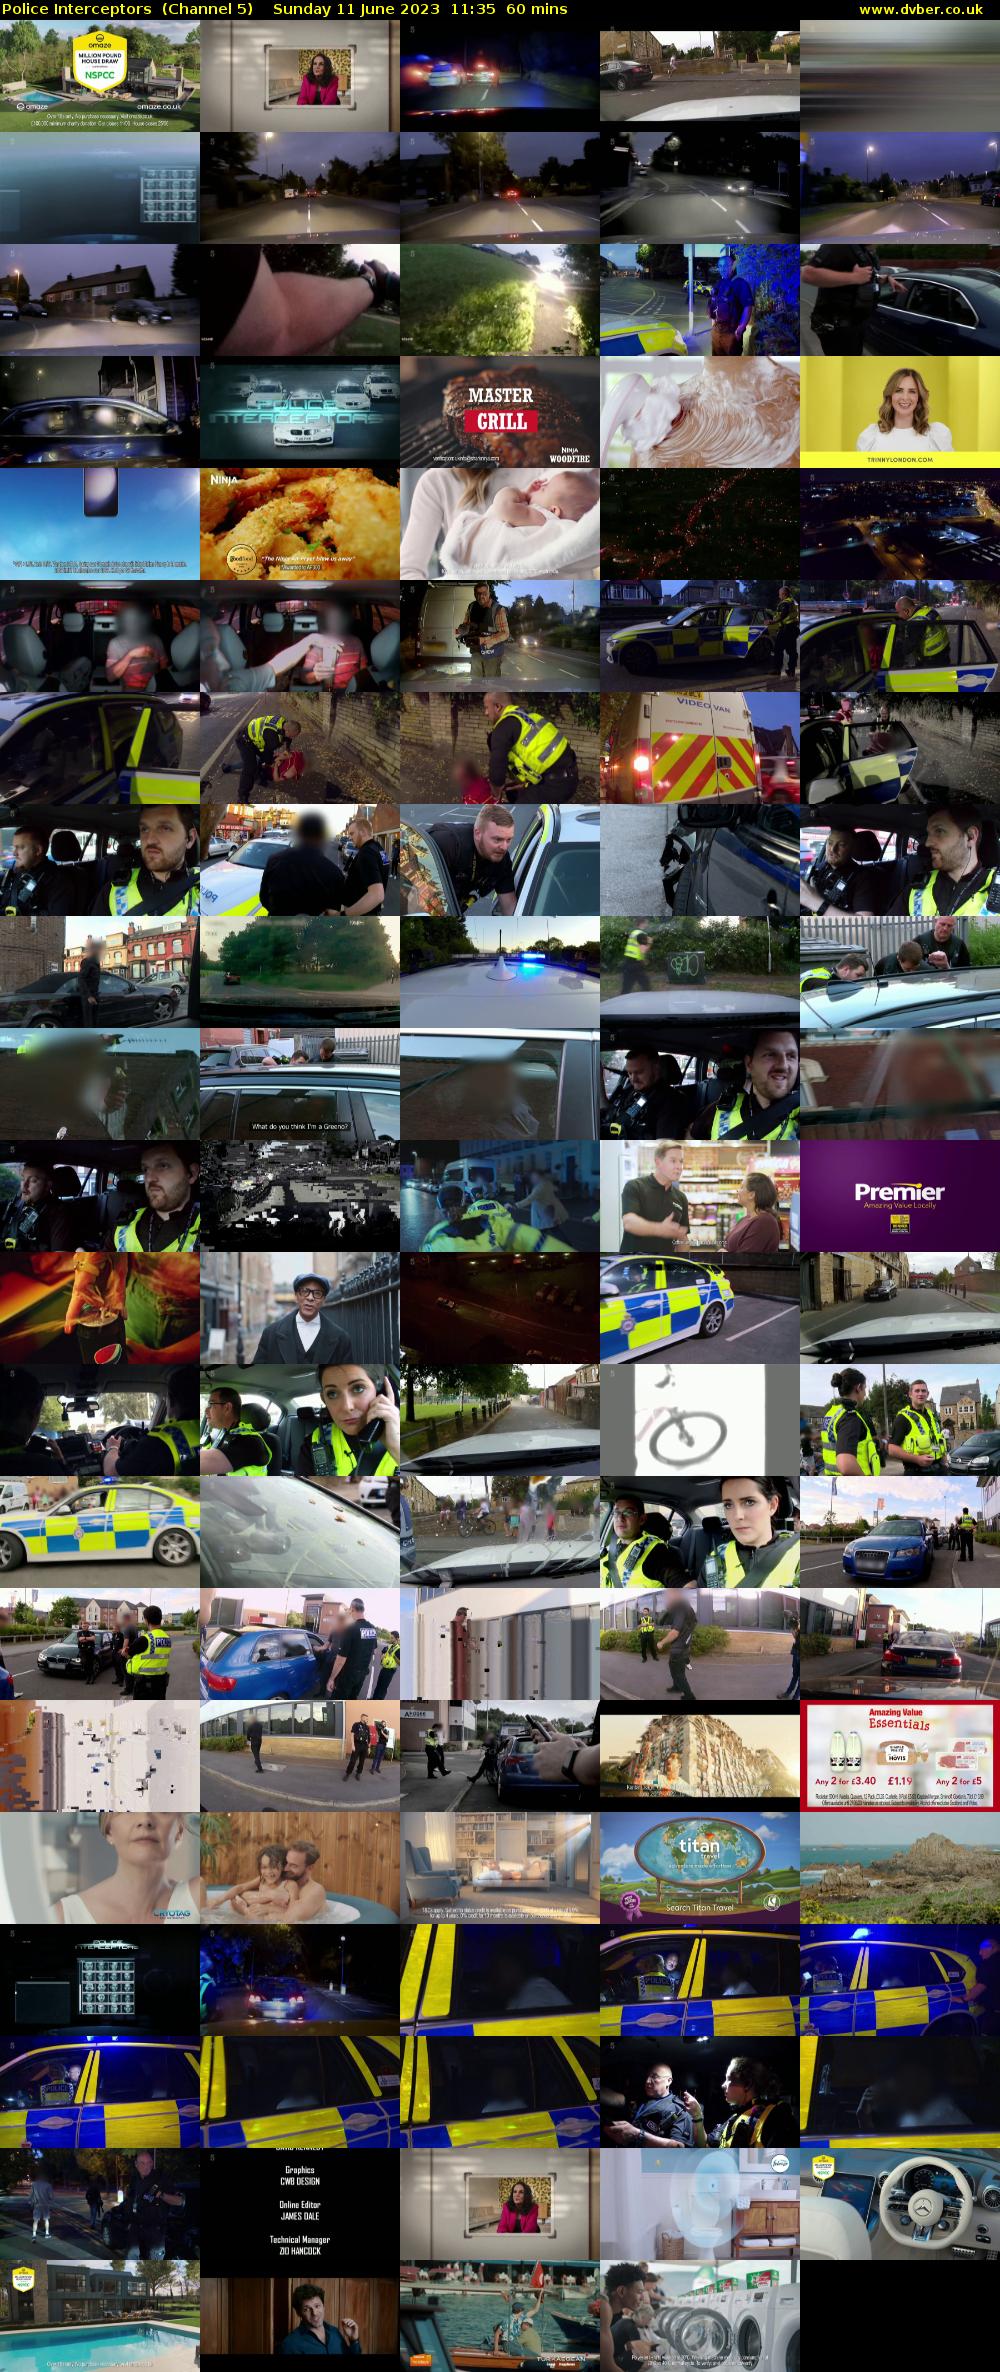 Police Interceptors  (Channel 5) Sunday 11 June 2023 11:35 - 12:35